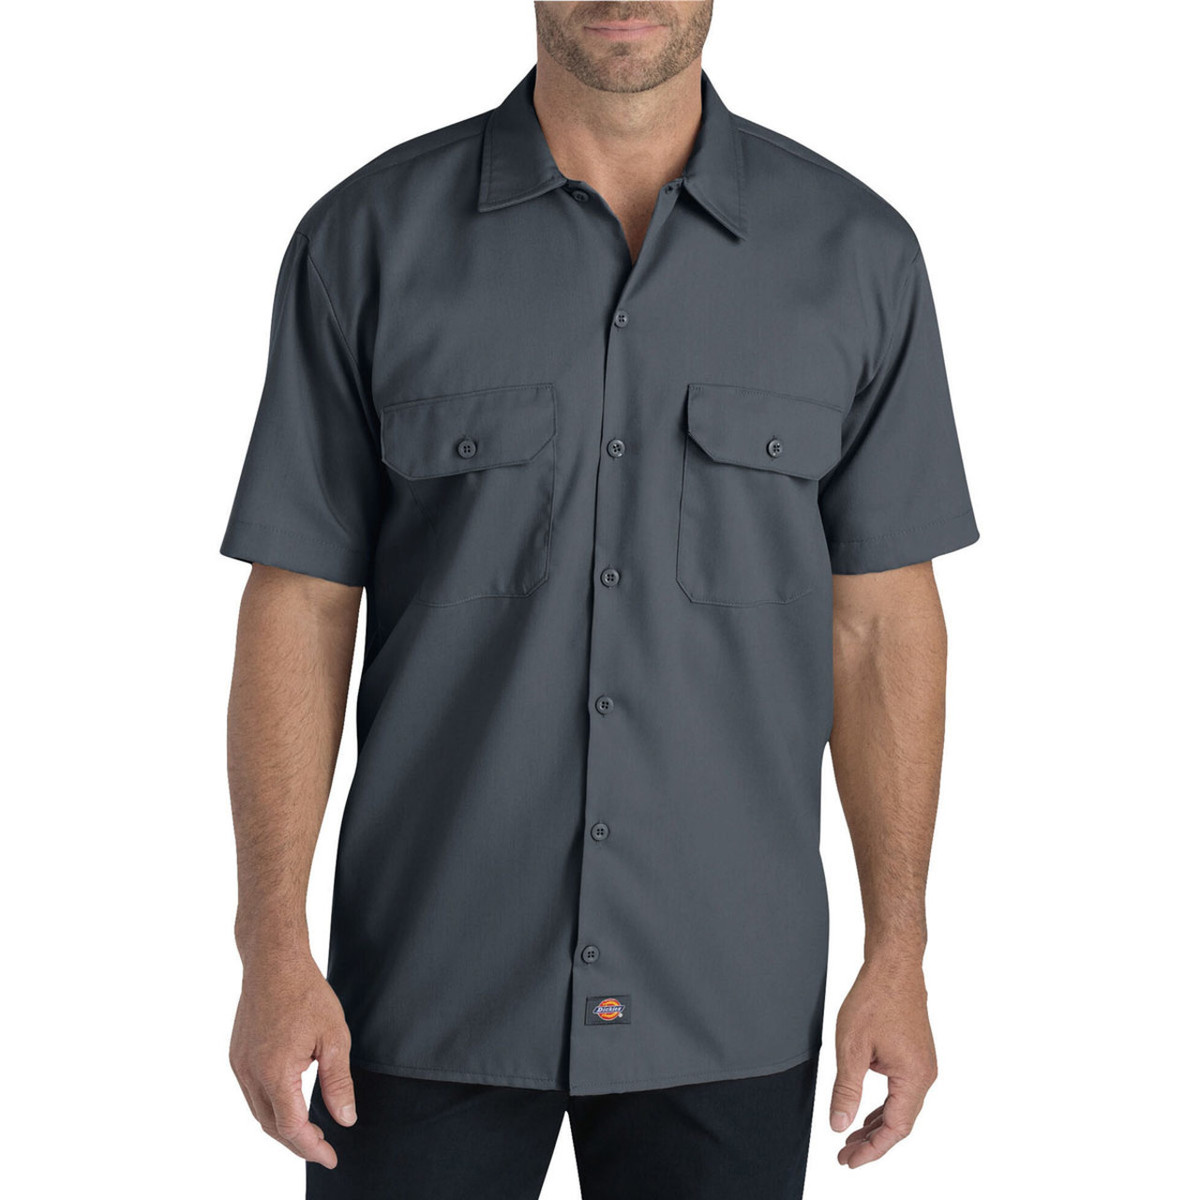 Dickies mens Short Sleeve Graphic Tee T Shirt, Black, Small US